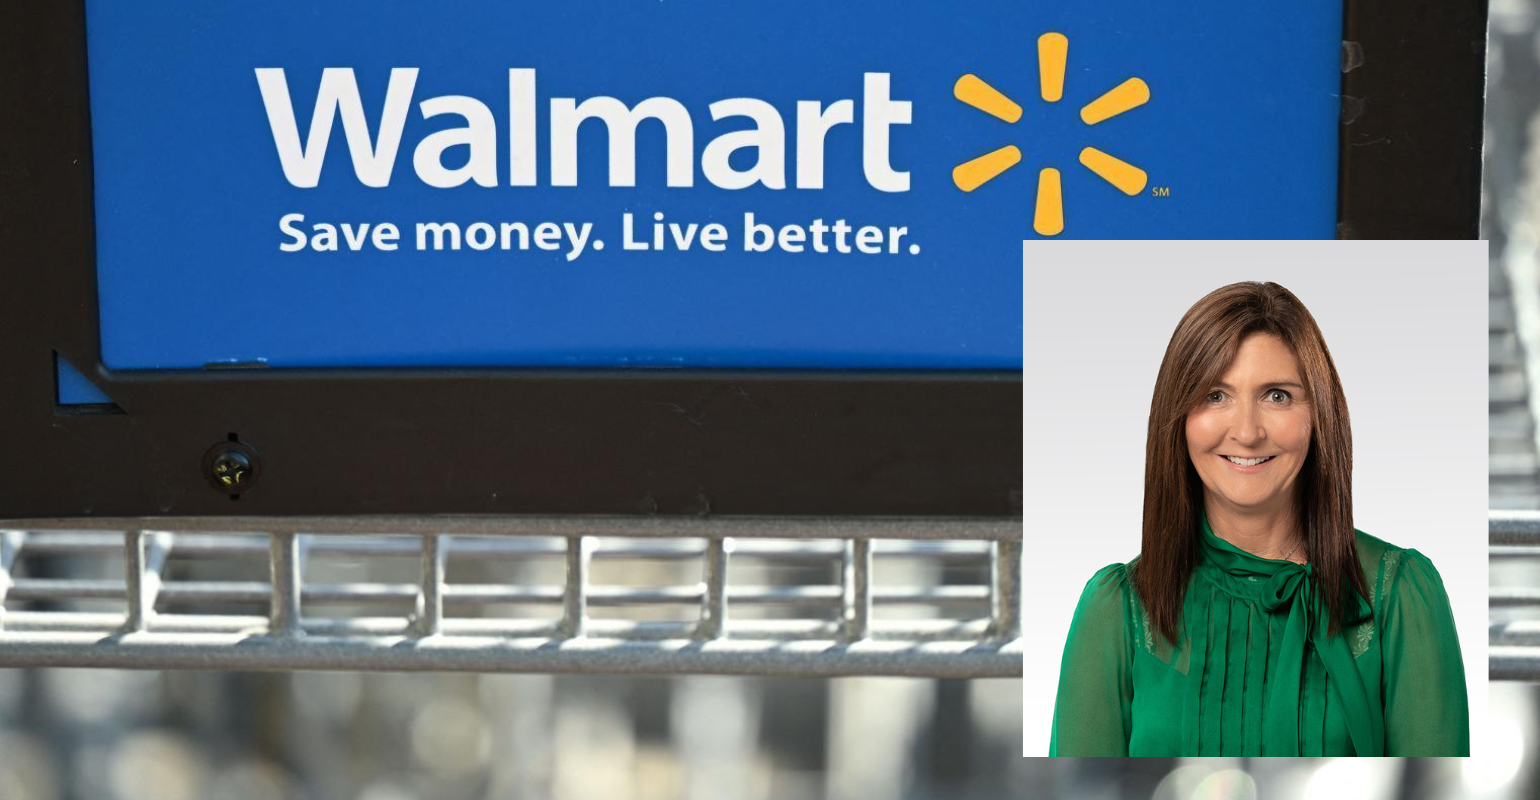 Walmart  Save Money. Live better.